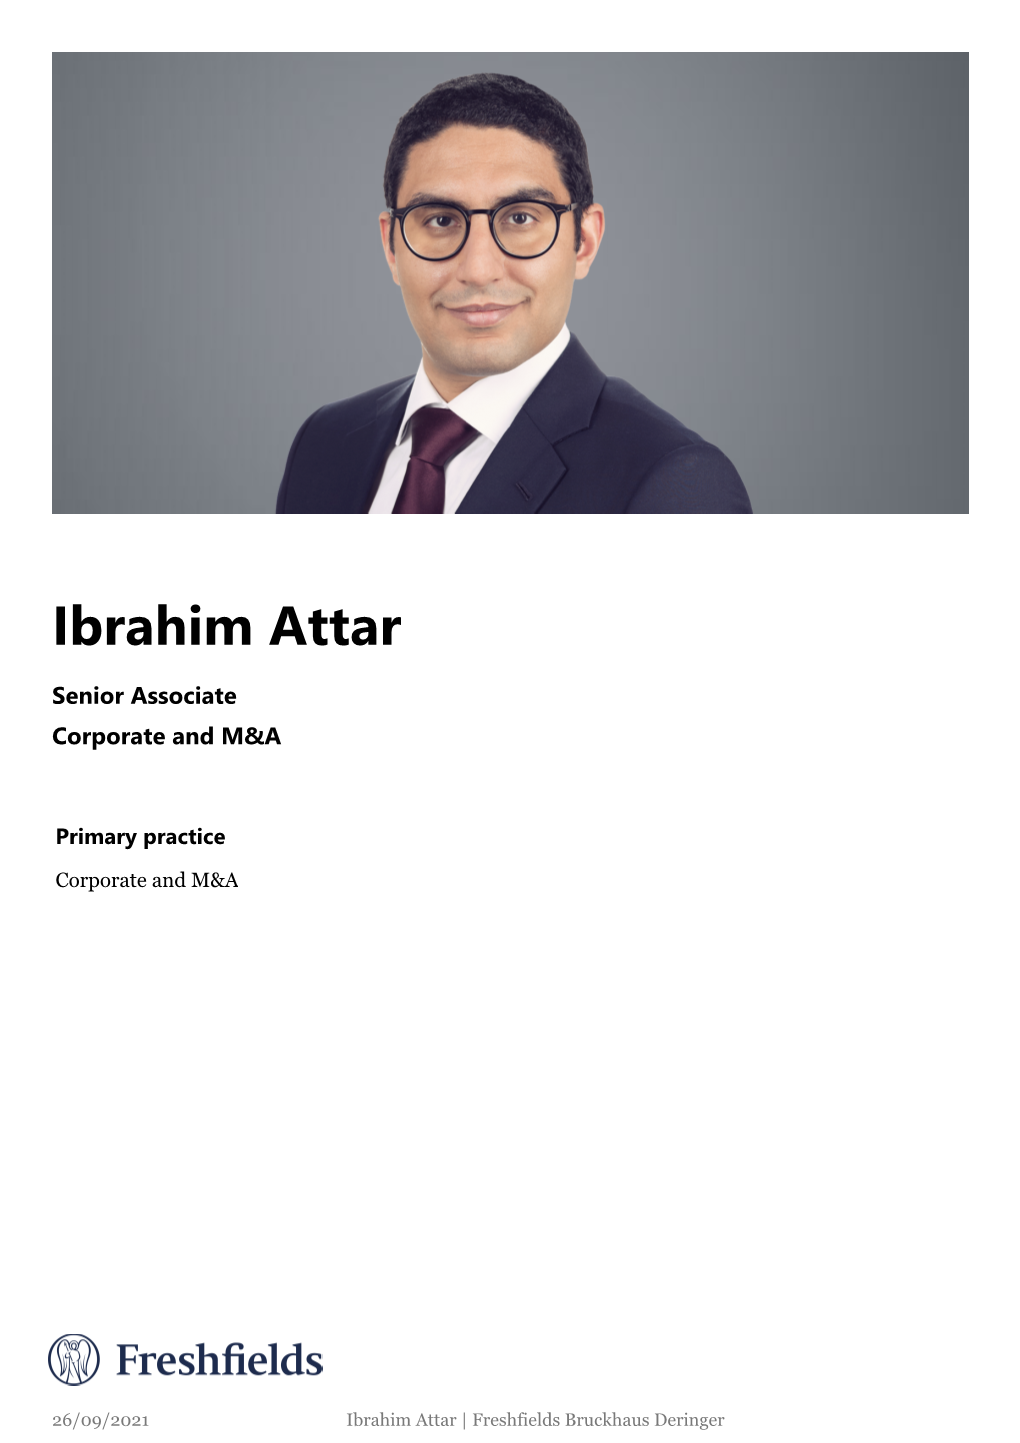 Ibrahim Attar